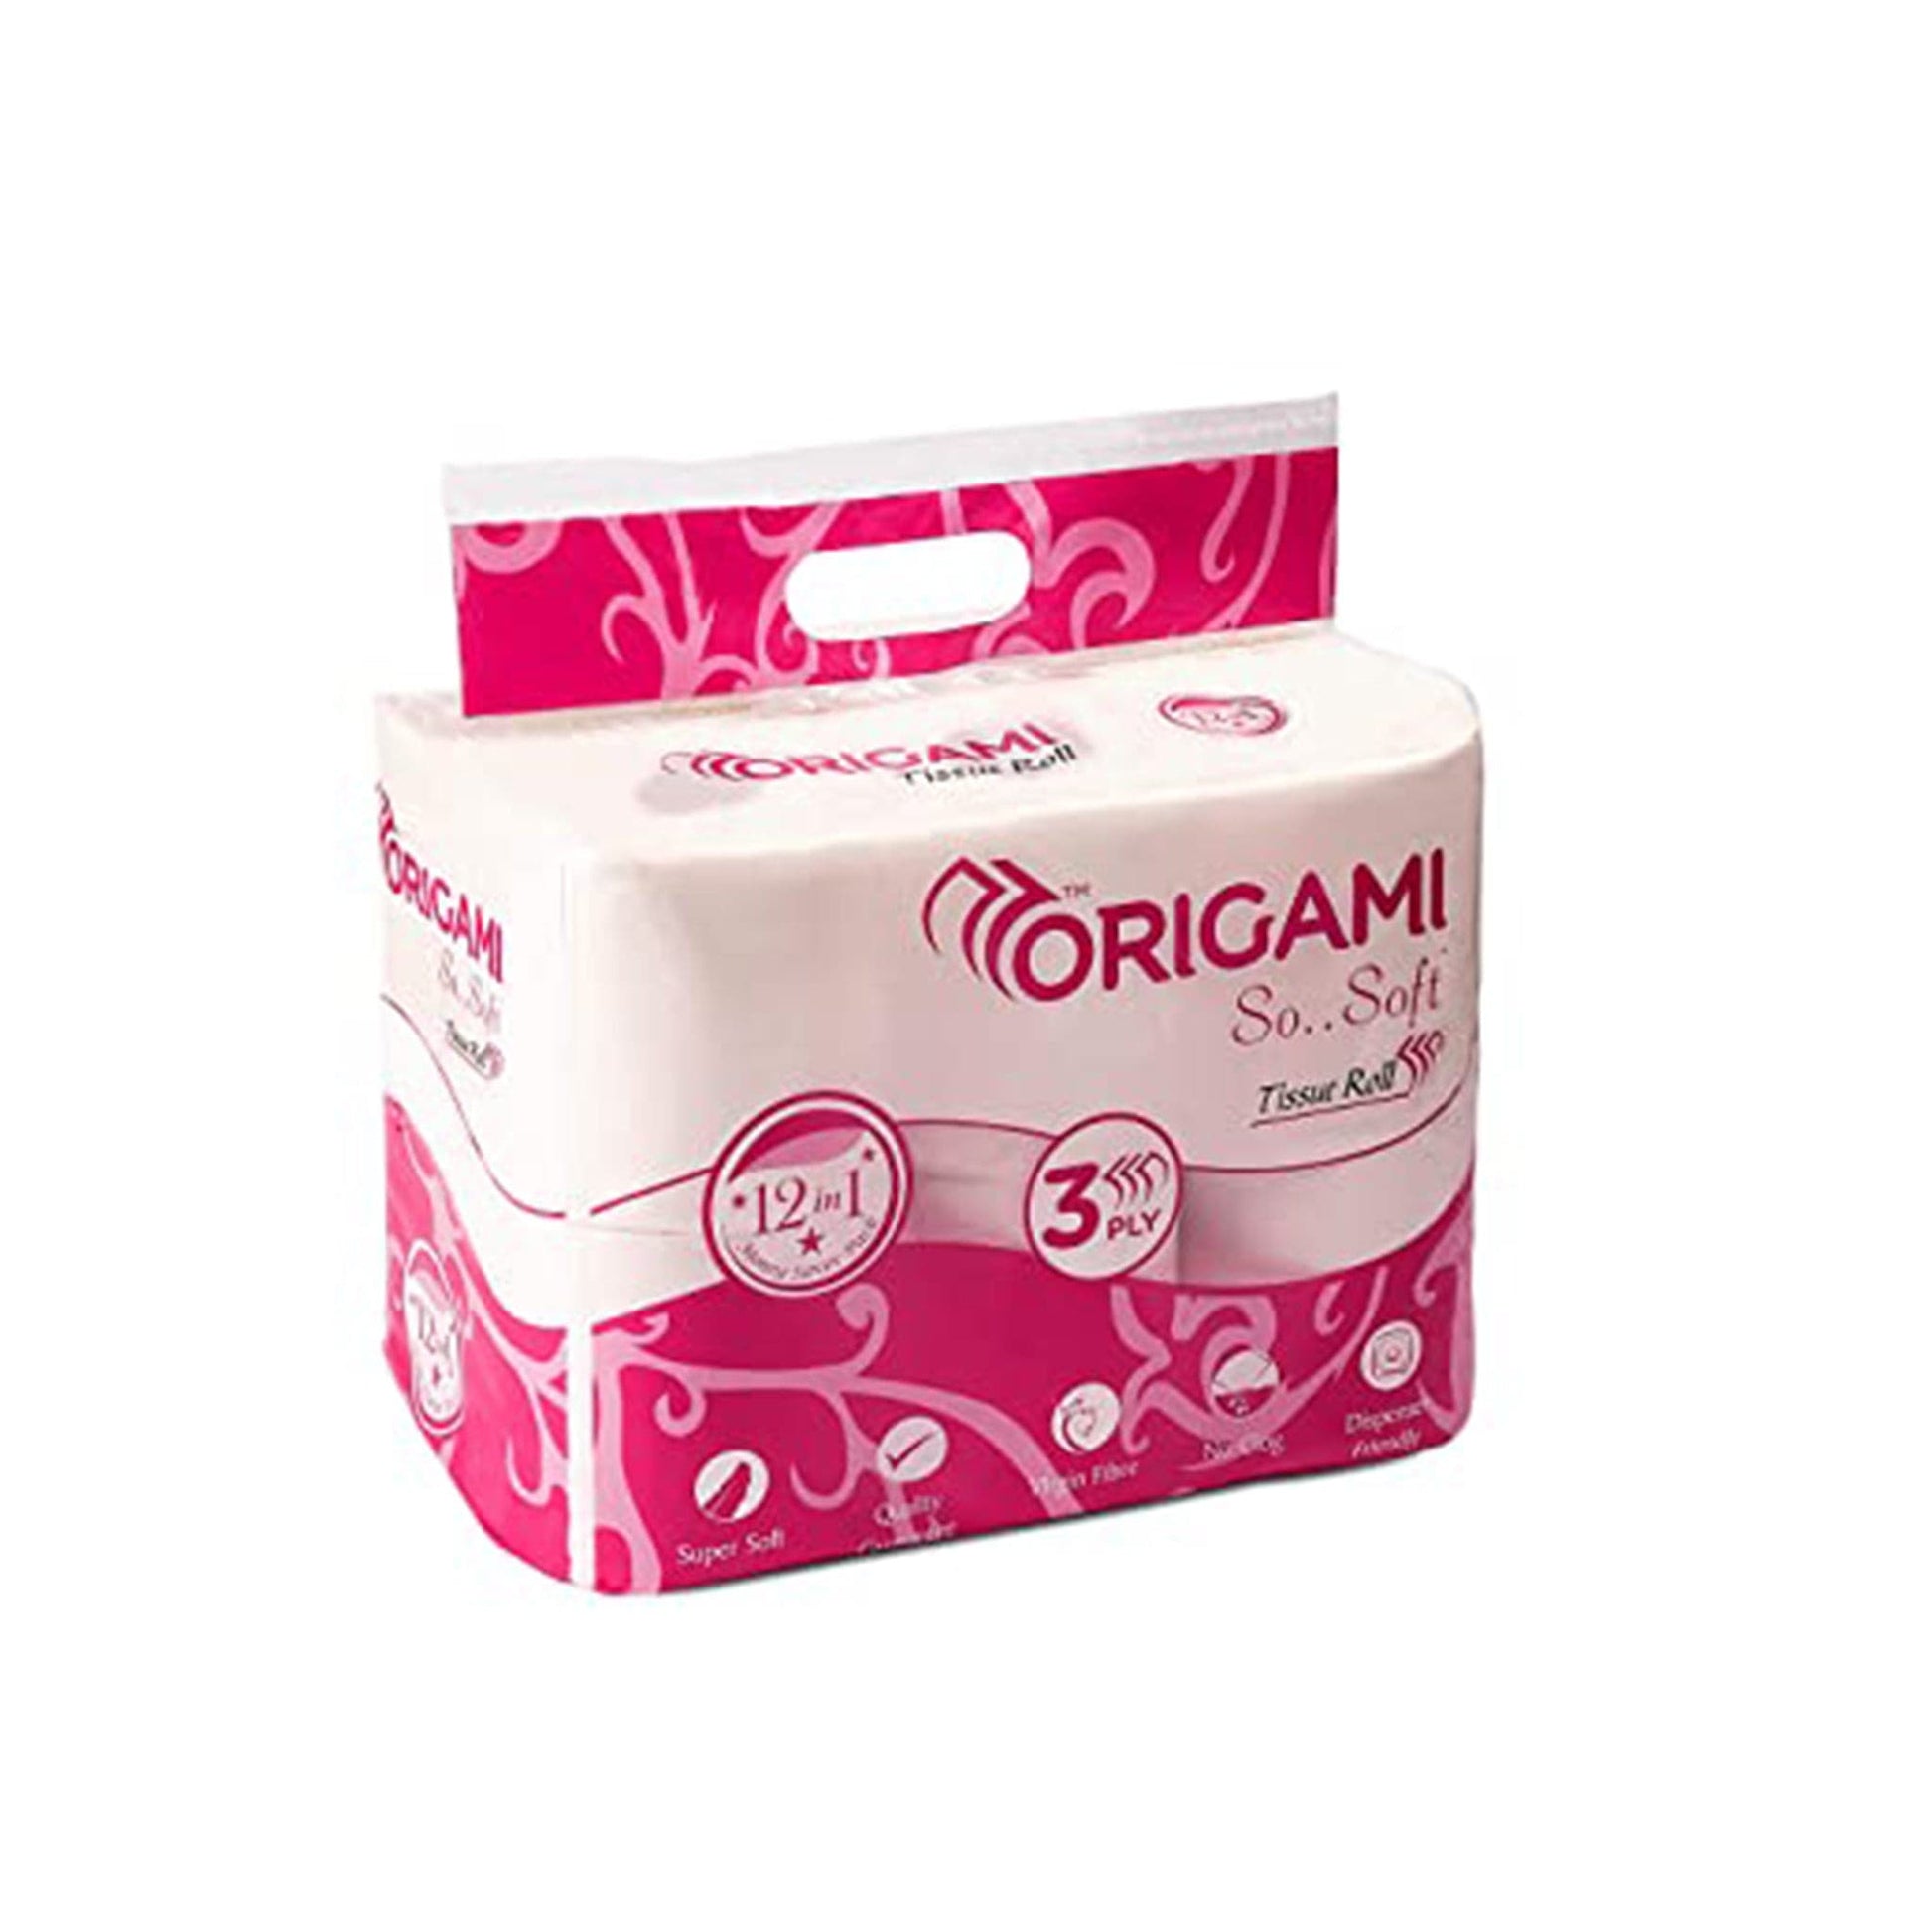 Origami Tissue Roll.